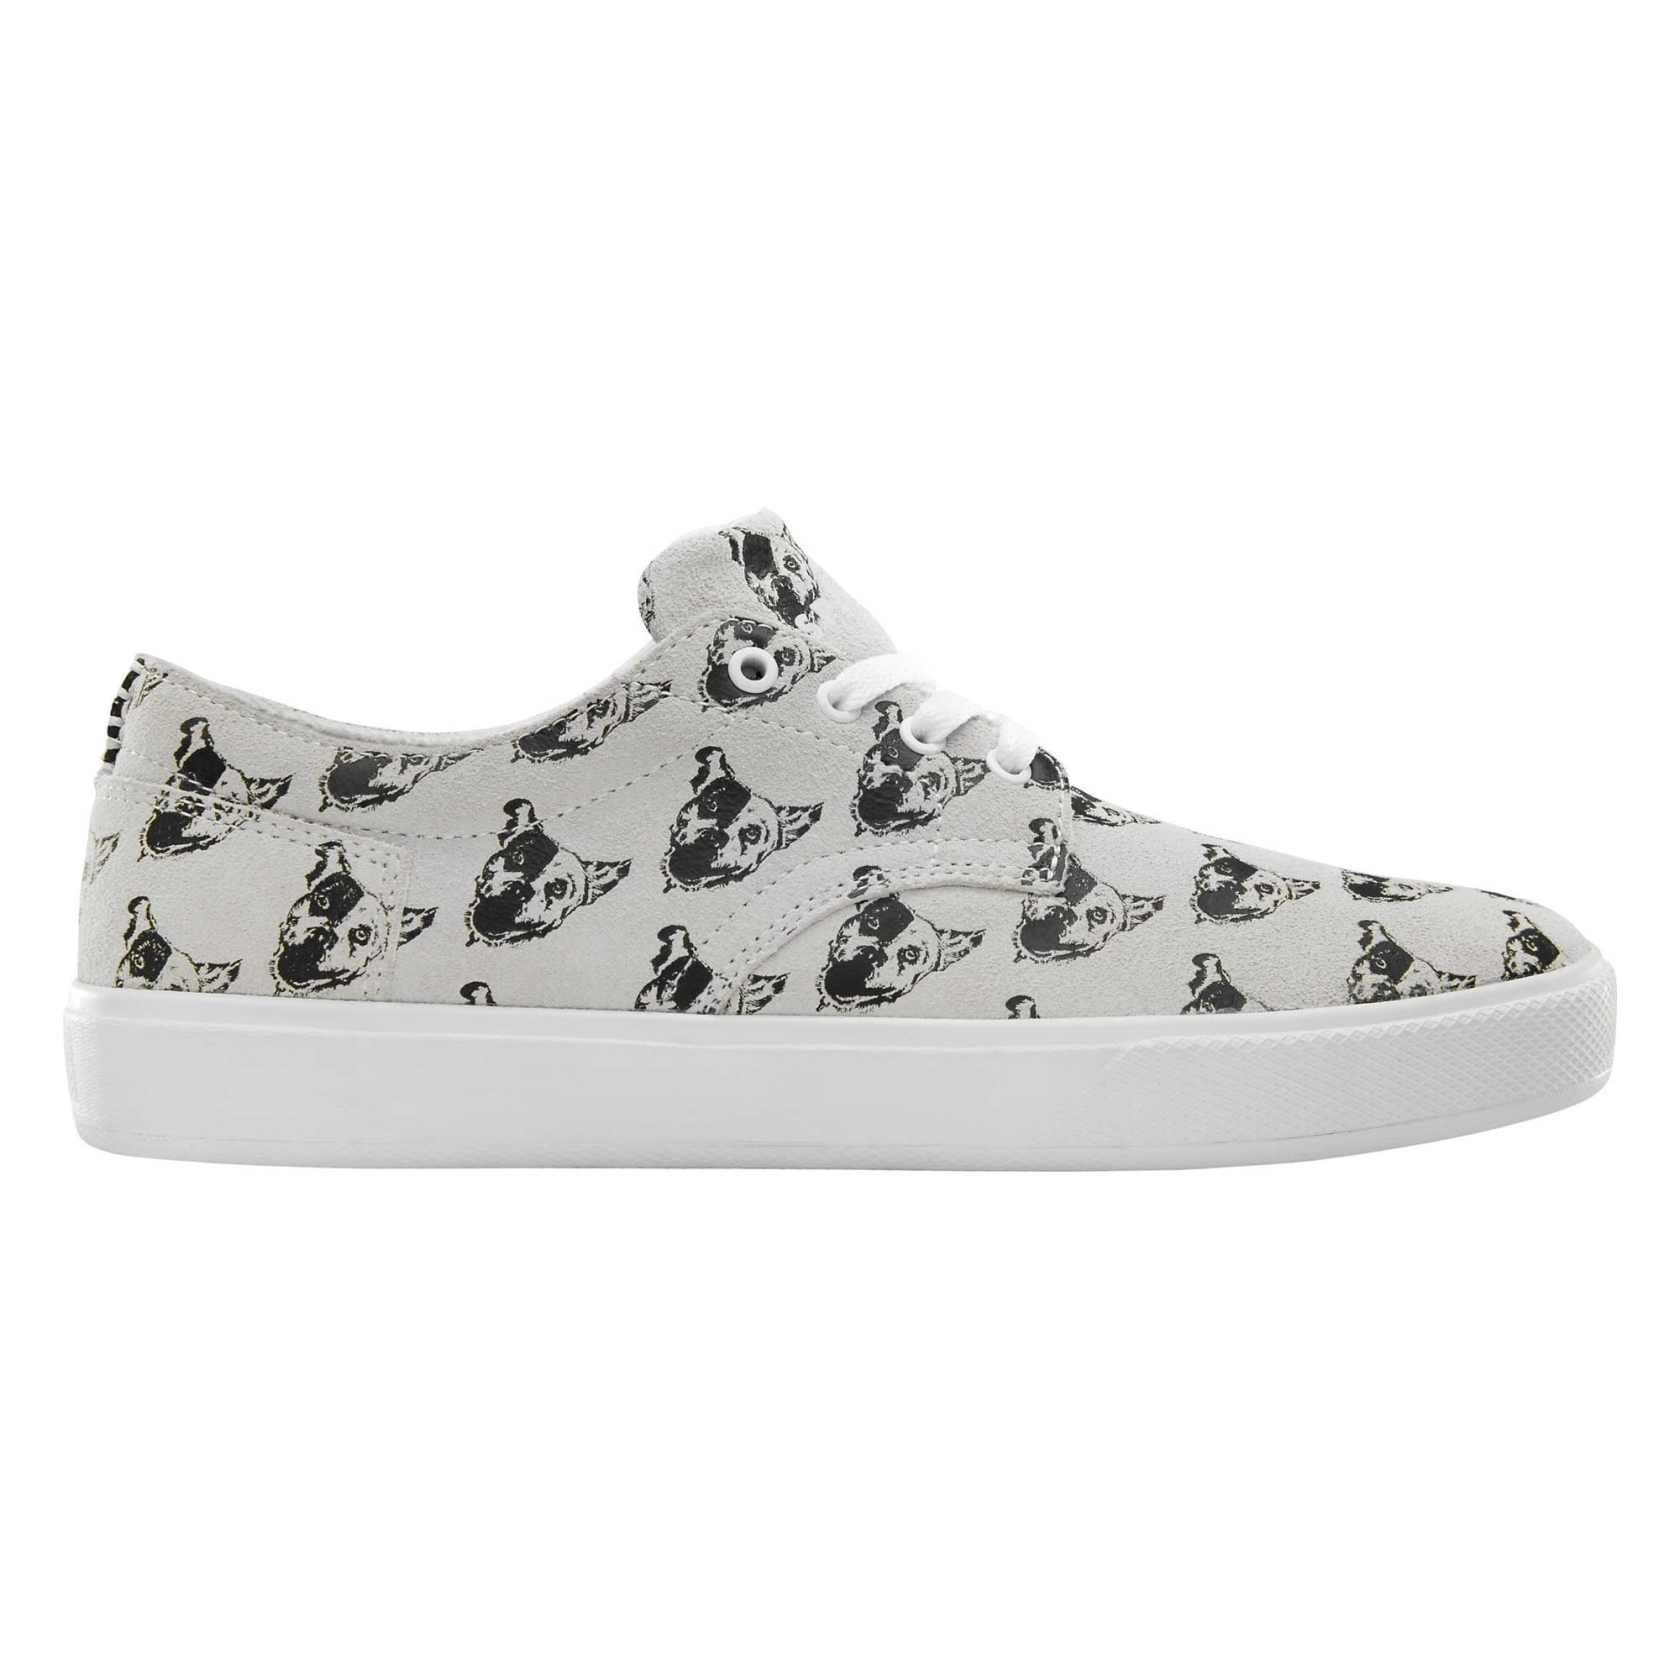 EMERICA Shoe SPANKY G6 whi/bla, white/black